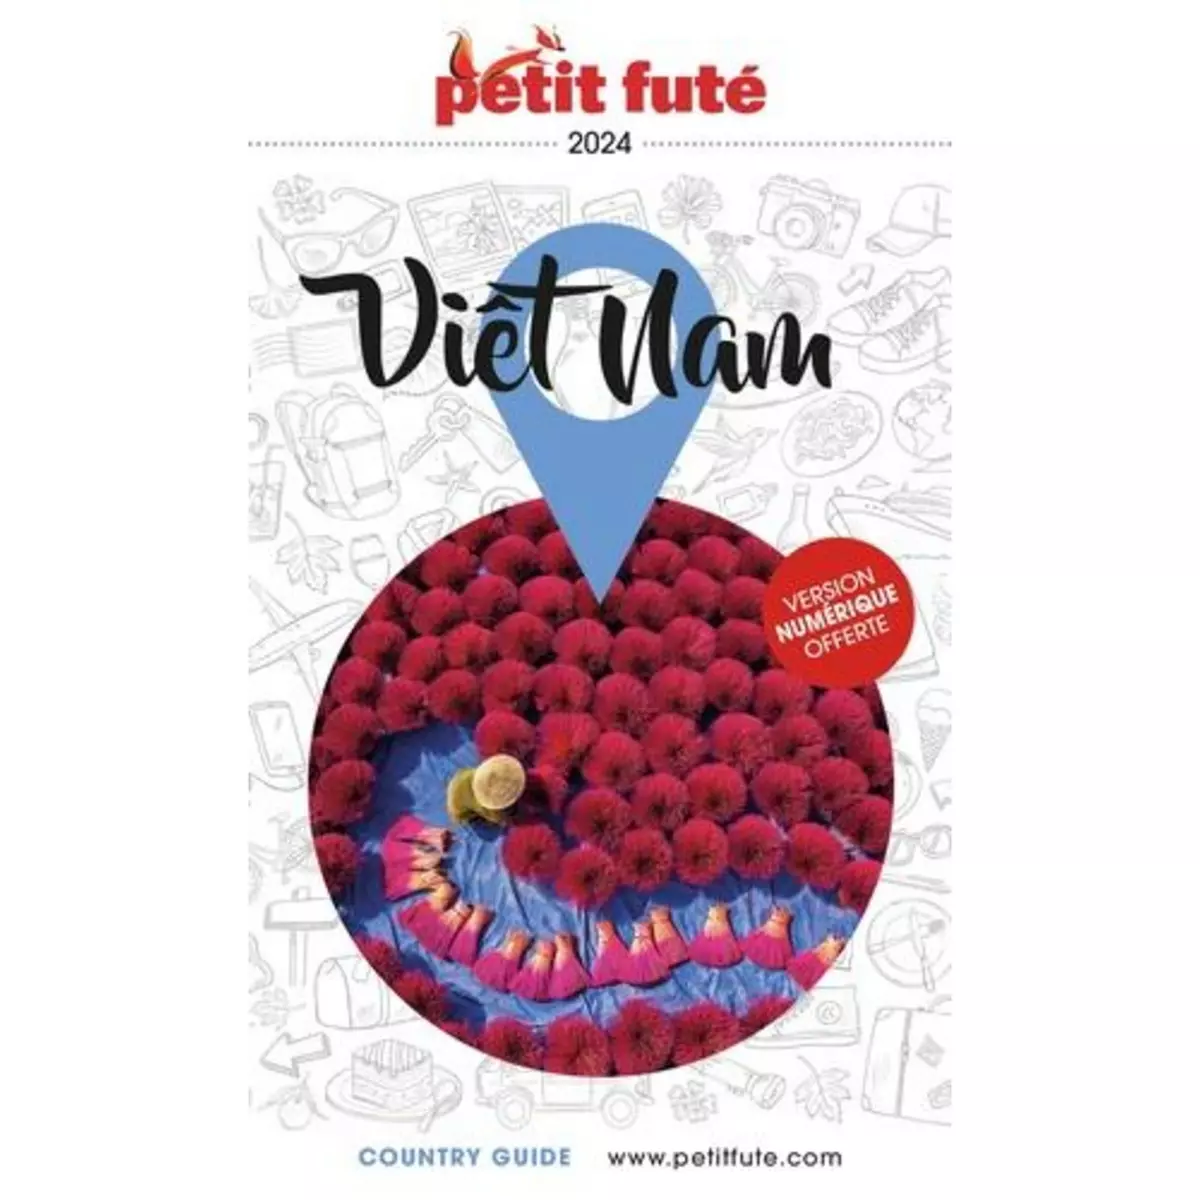  PETIT FUTE VIETNAM. EDITION 2024, Petit Futé